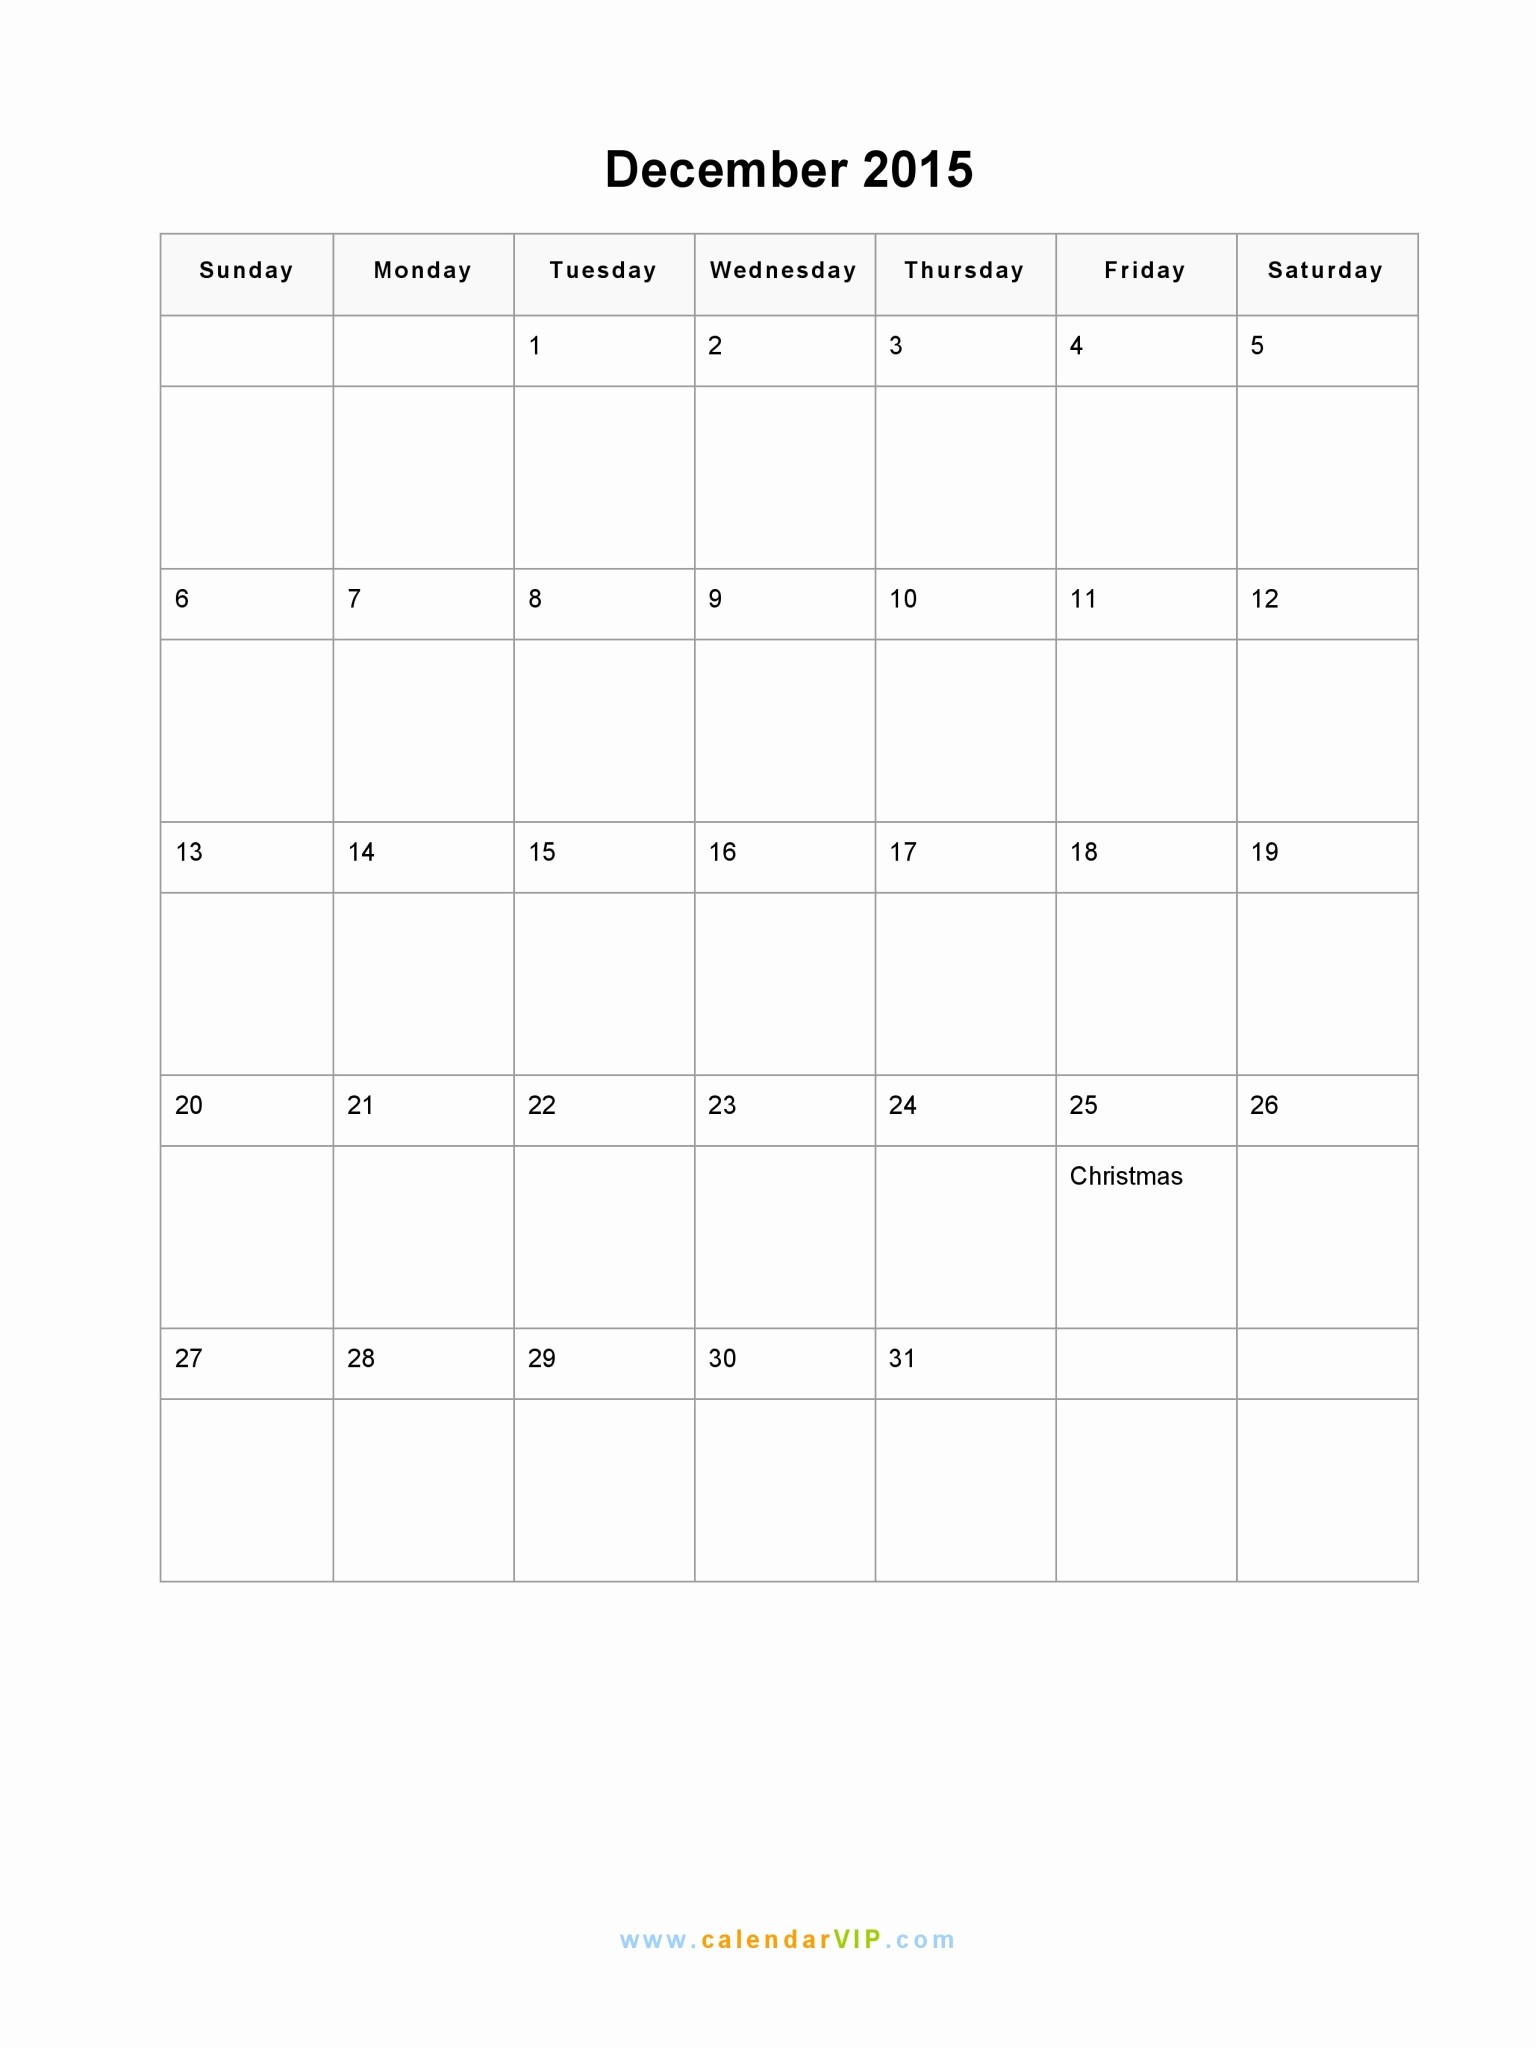 December 2015 Calendar Word Document Unique December 2015 Calendar Blank Printable Calendar Template